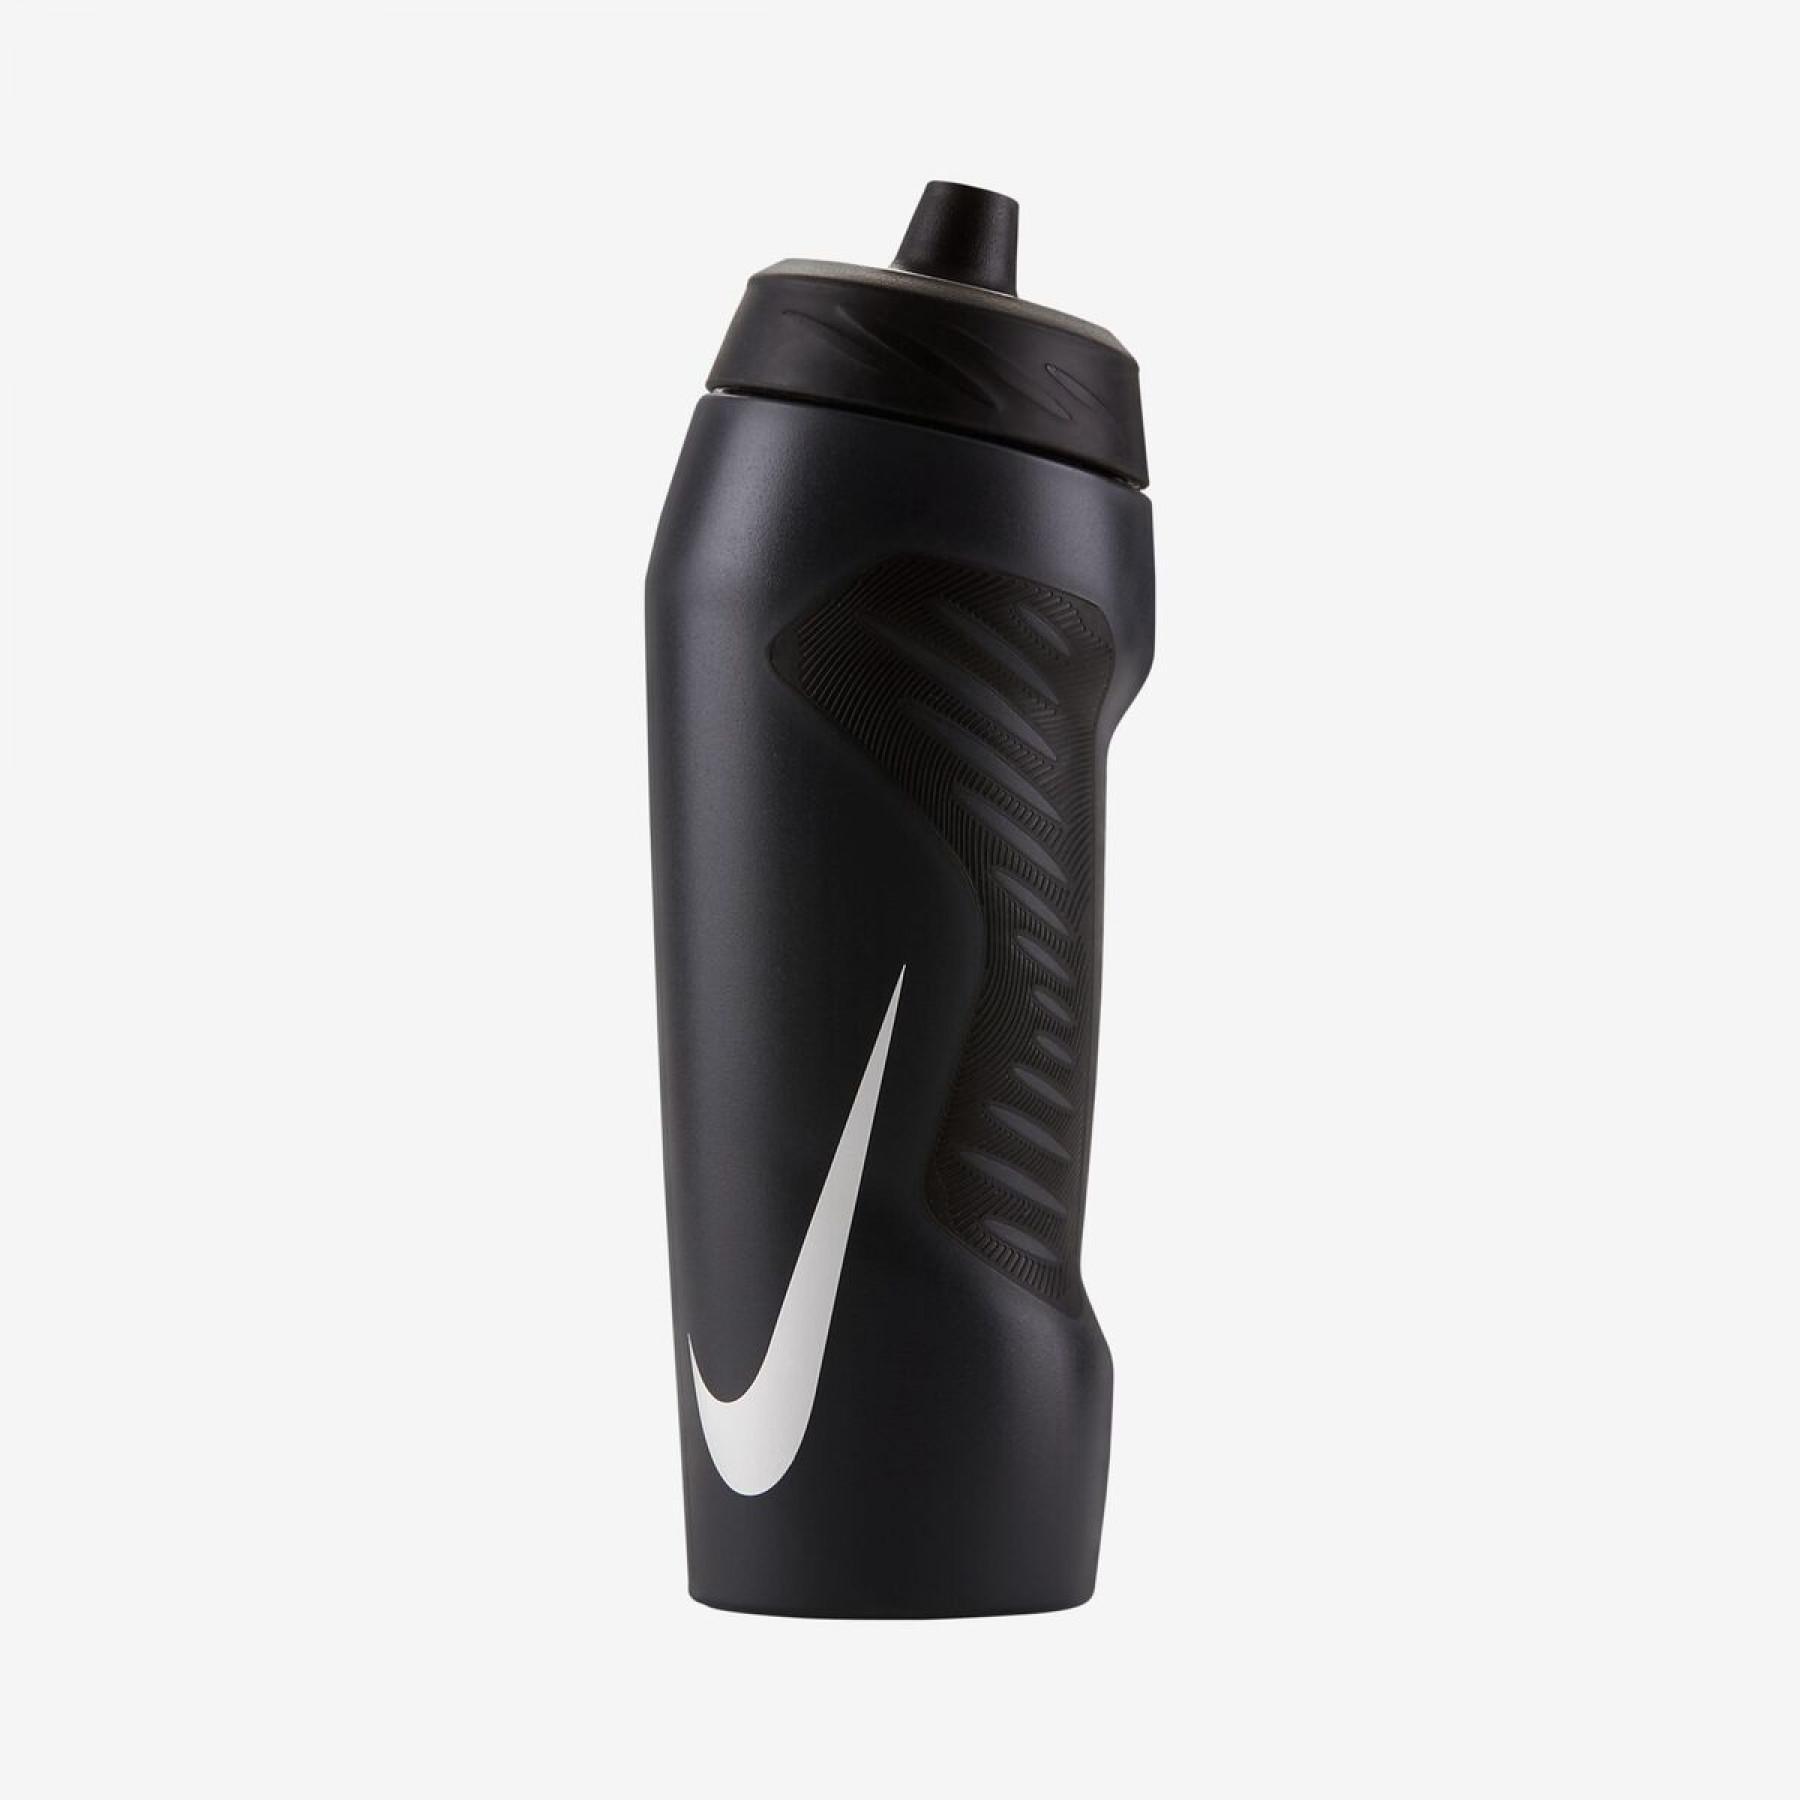 Borraccia Nike hyperfuel 710 ml